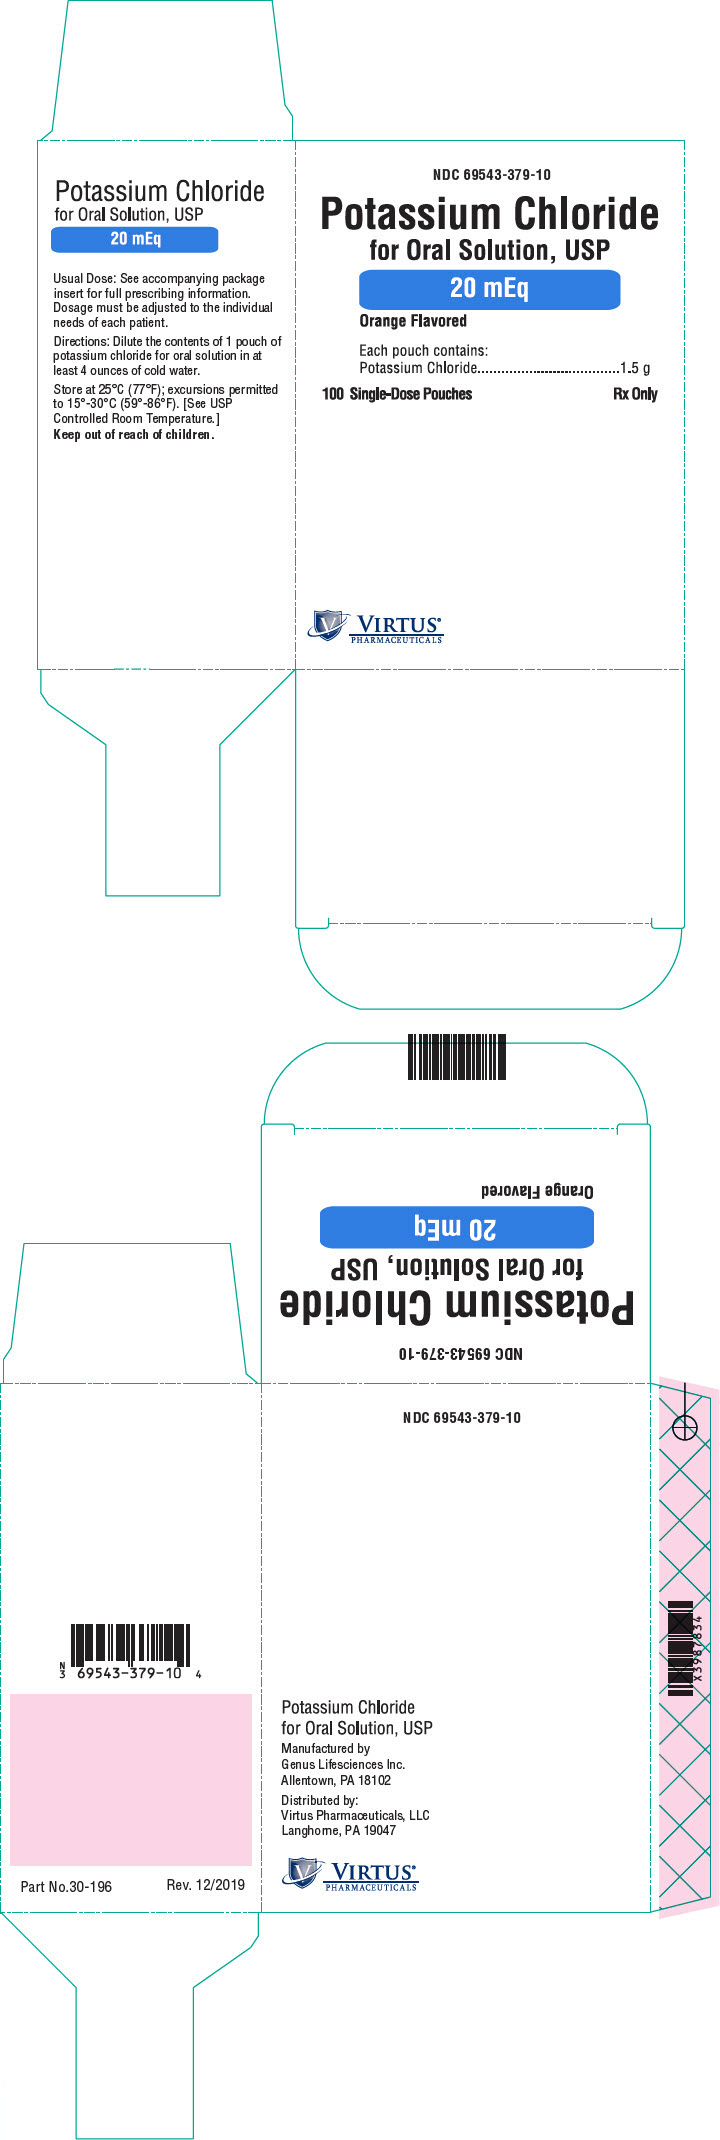 PRINCIPAL DISPLAY PANEL - 1.5 g Pouch Carton